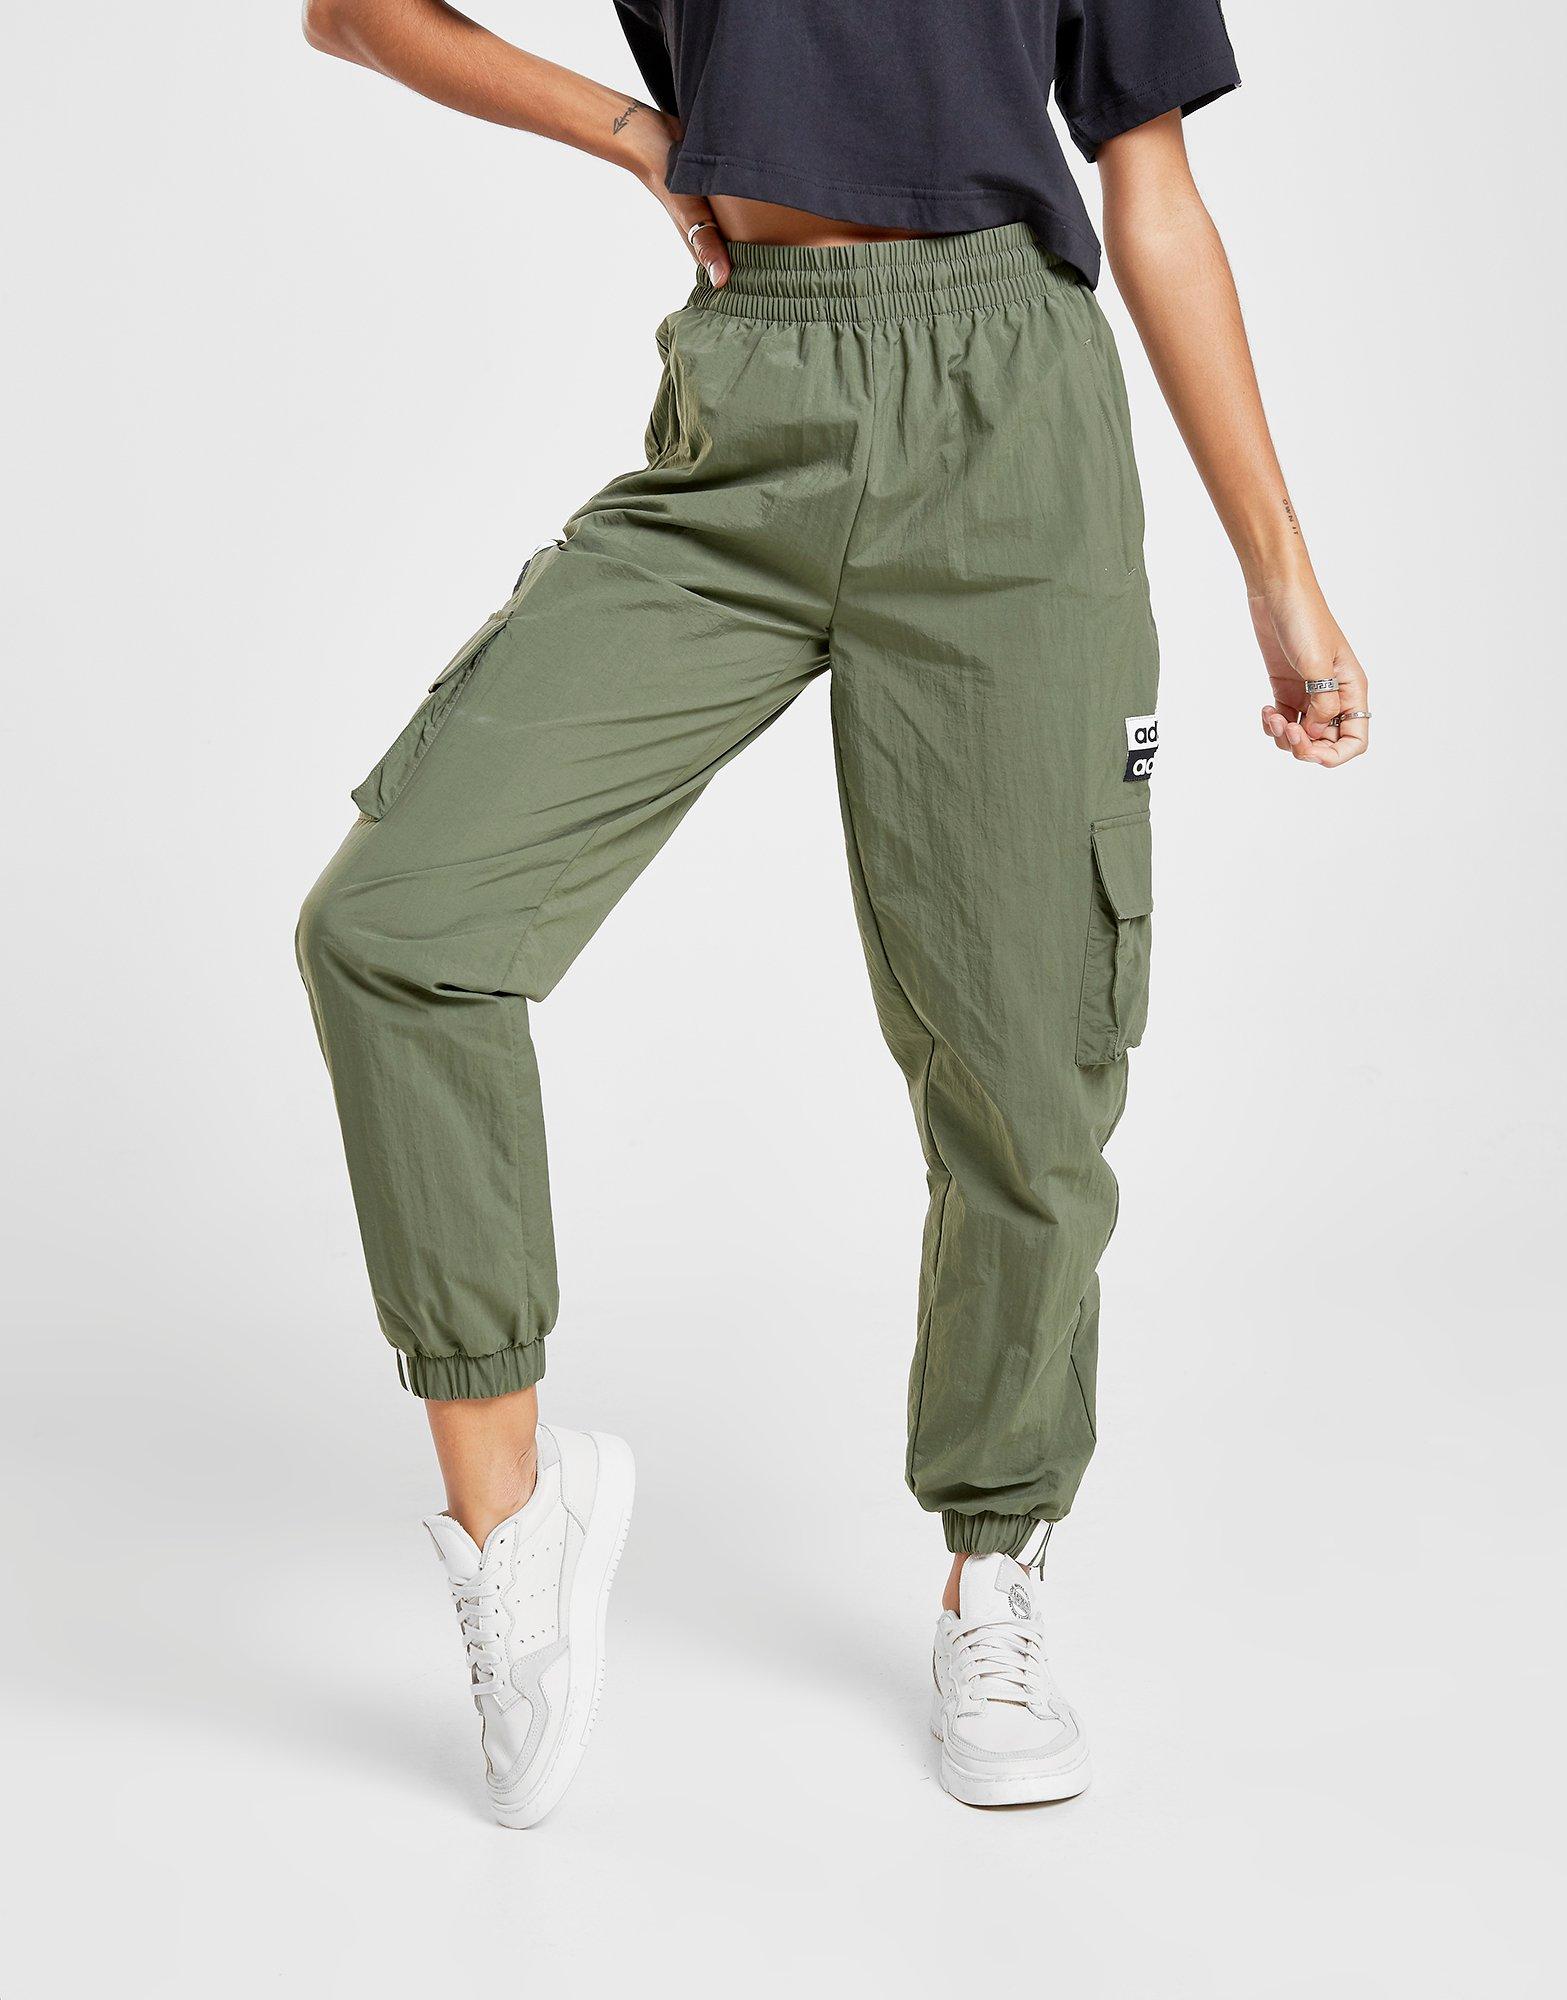 green track pants adidas